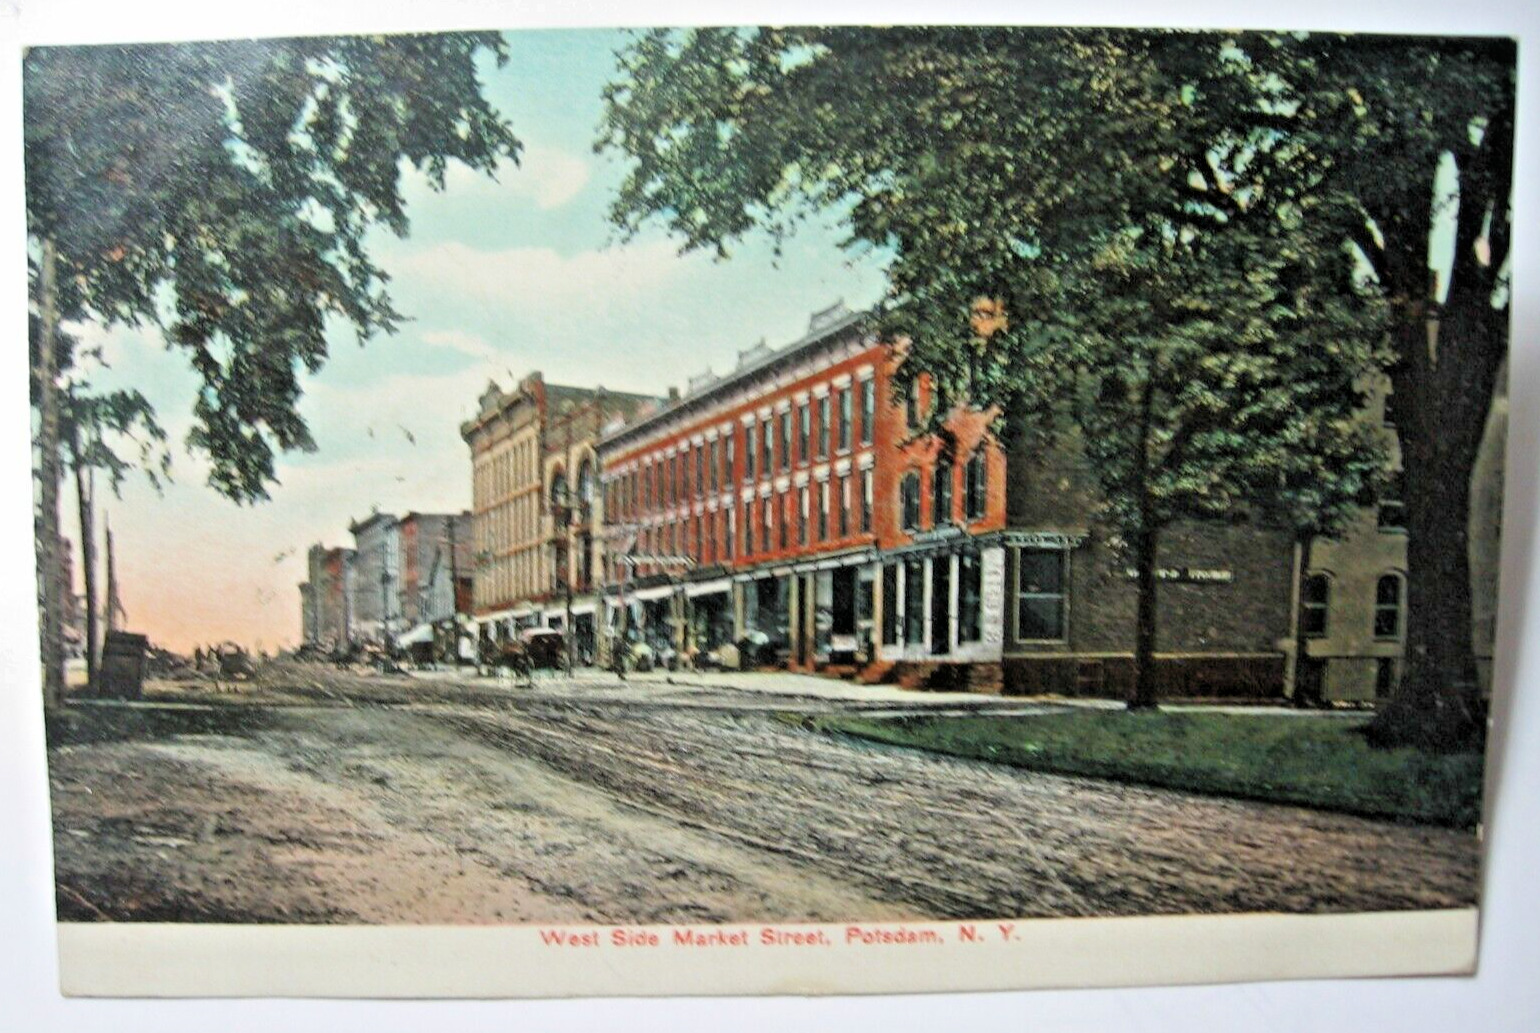 1907 West Side of Market Street, Potsdam, N.Y. Postcard